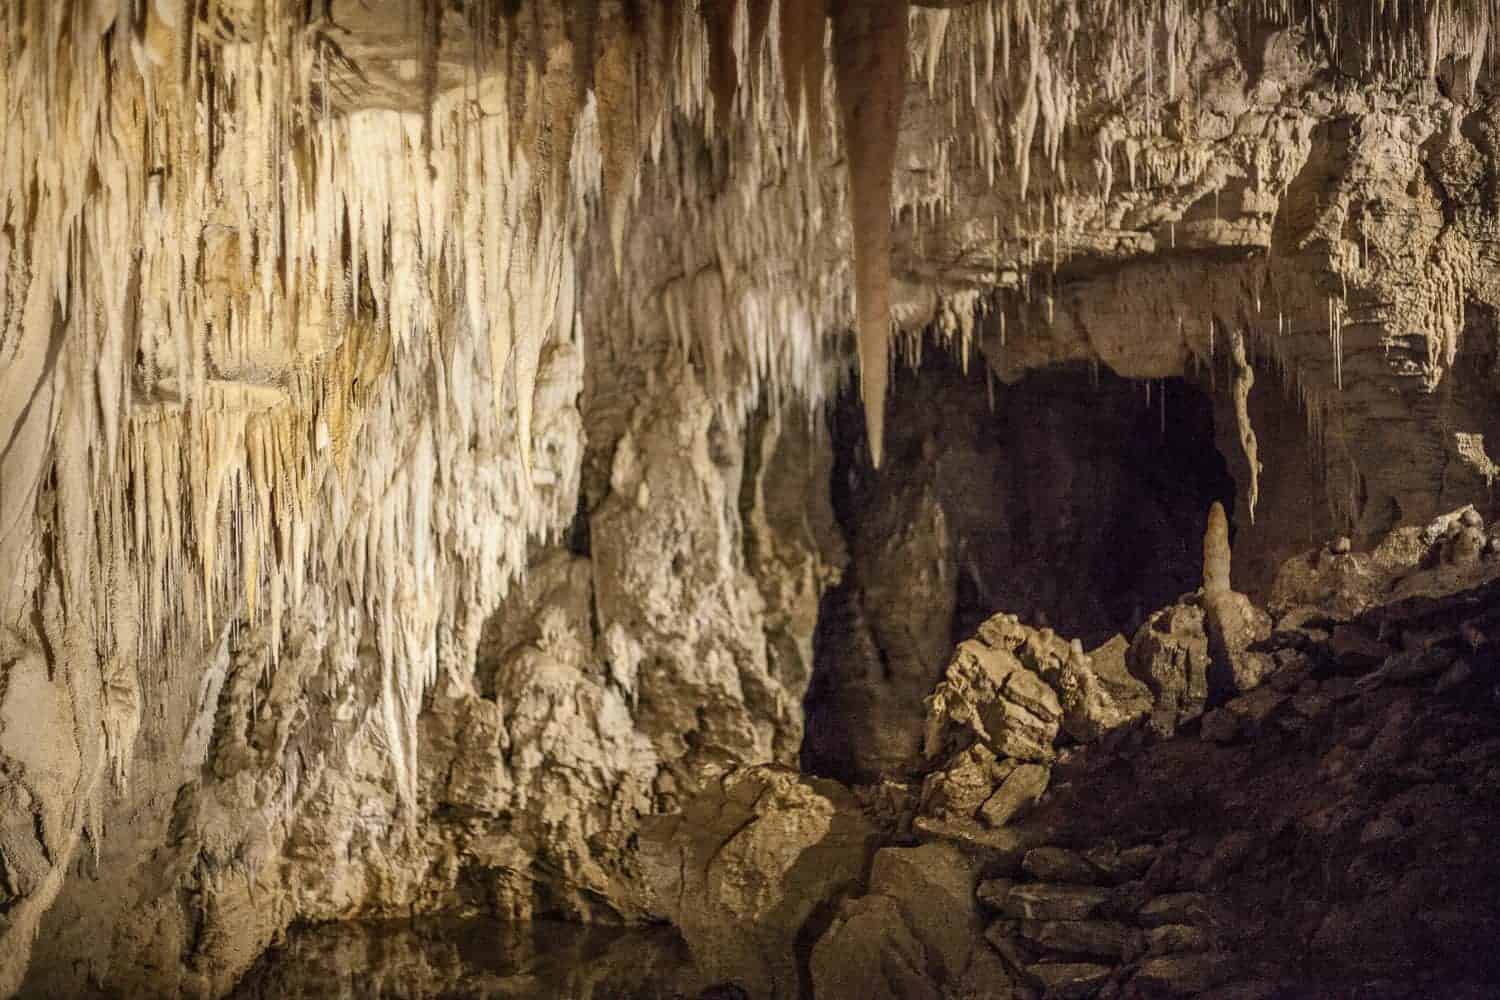 Waitomo cave tour review